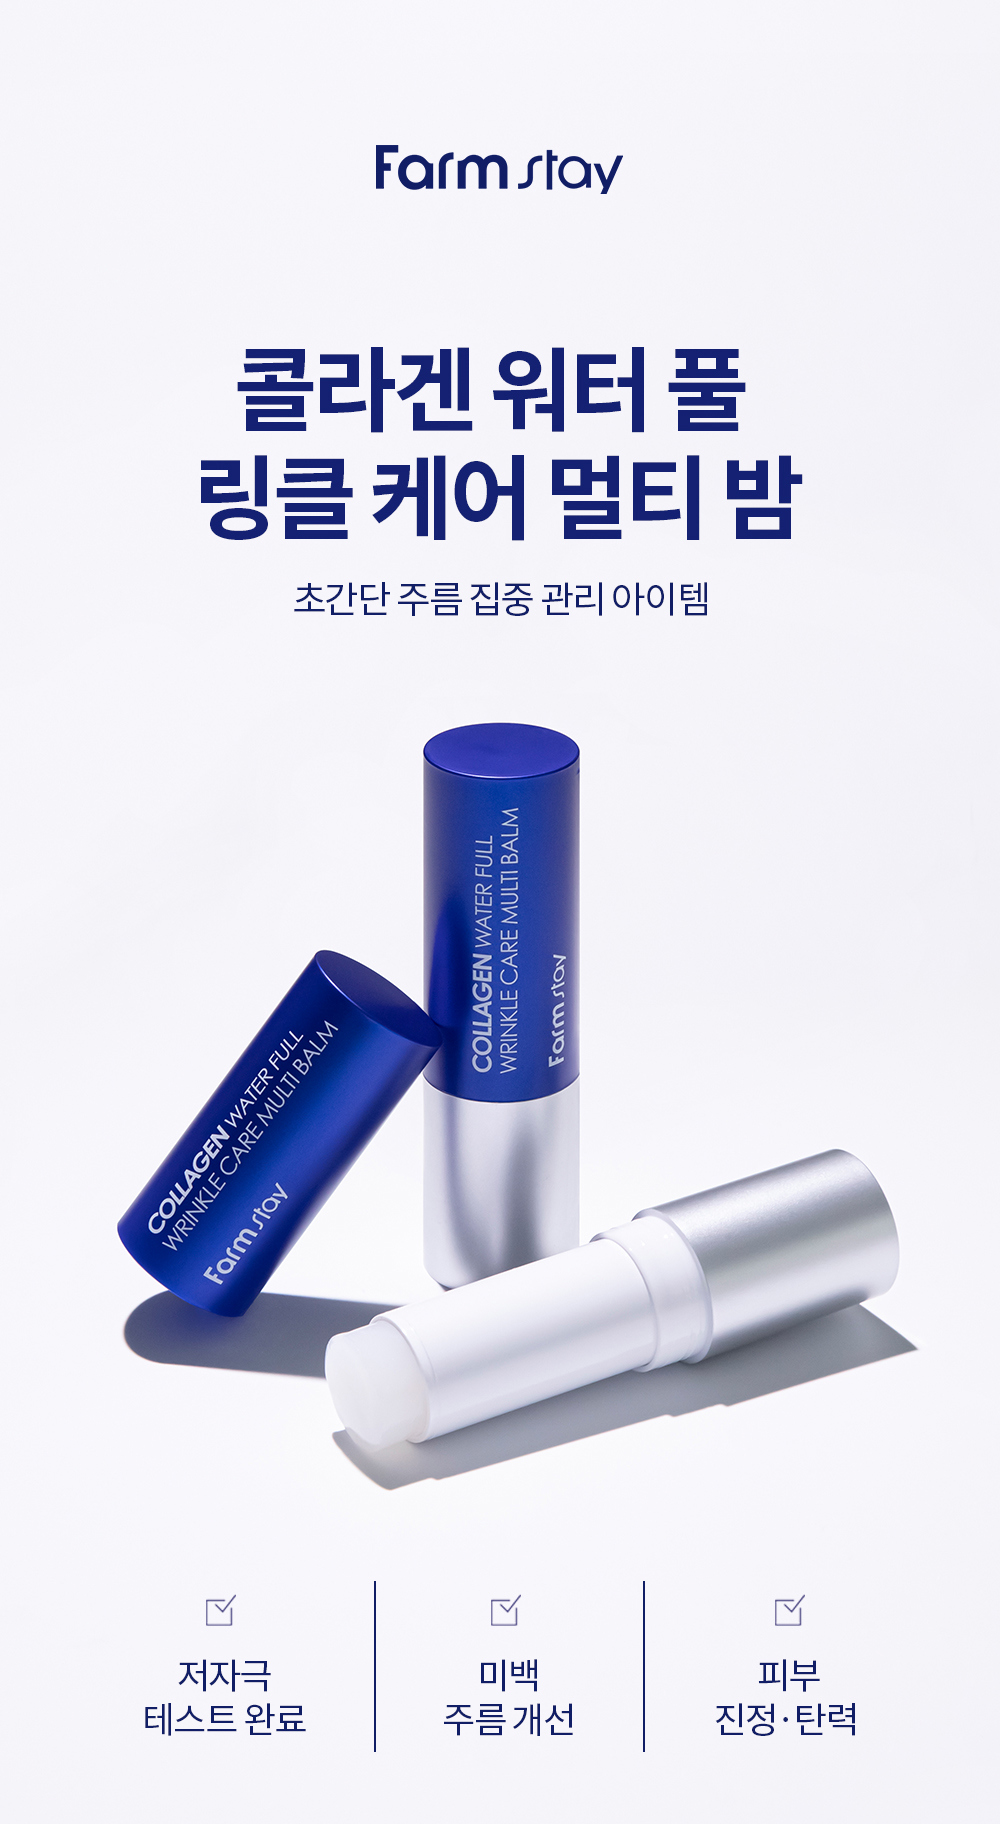 cosmetics product image-S3L1